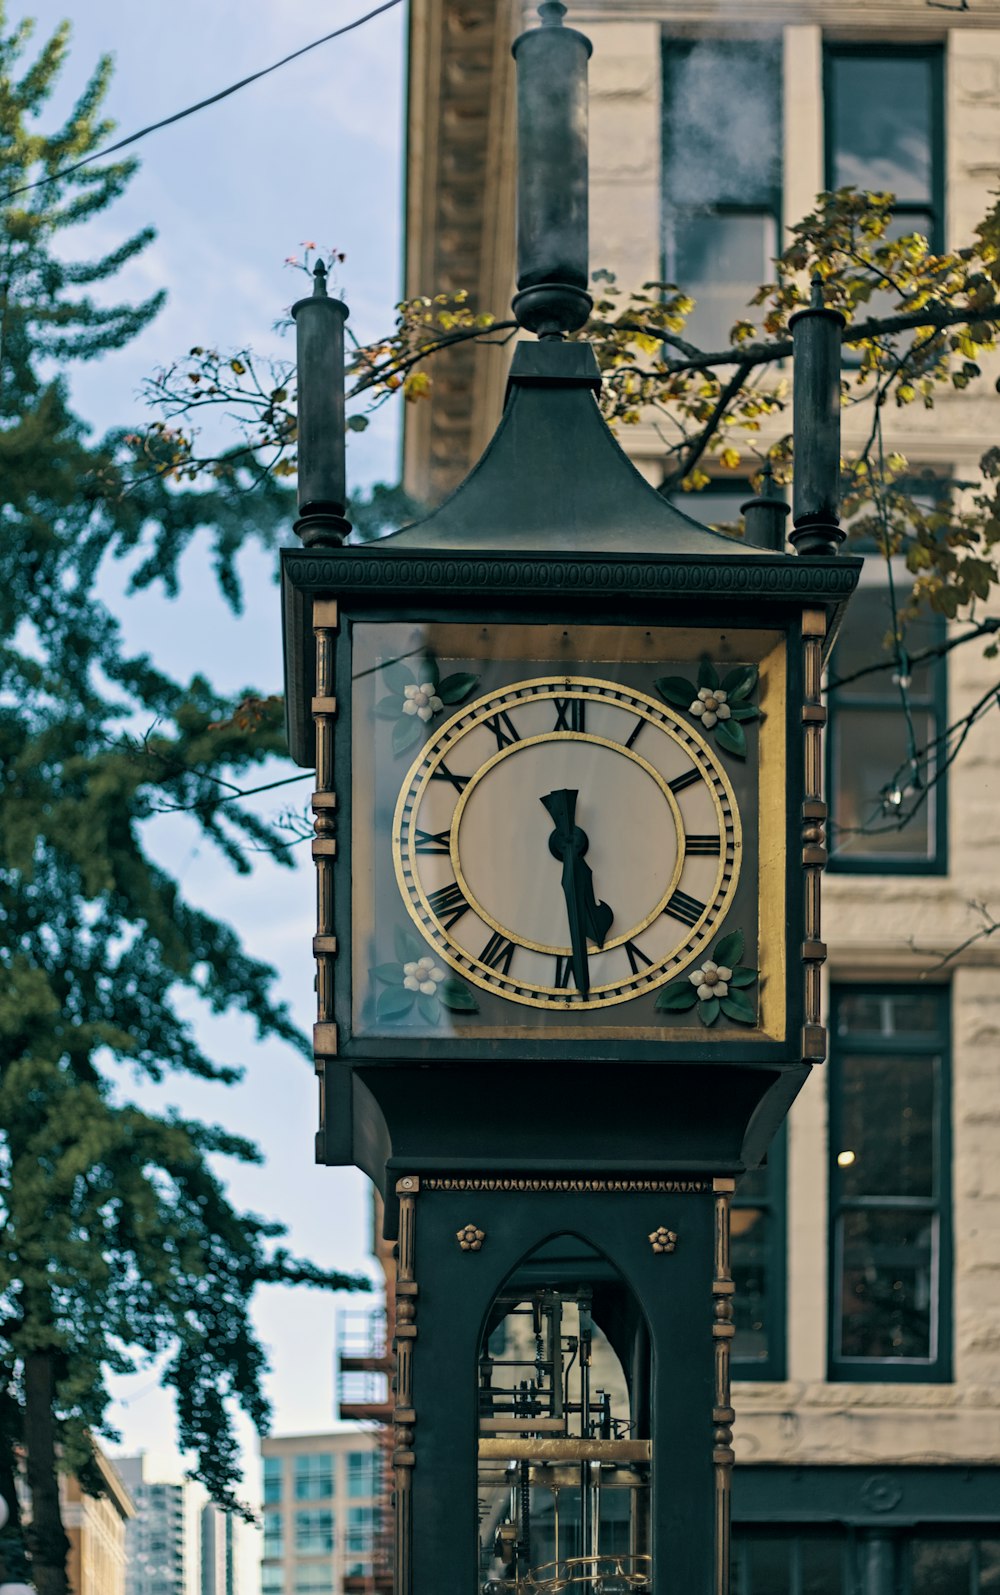 a clock on a pole